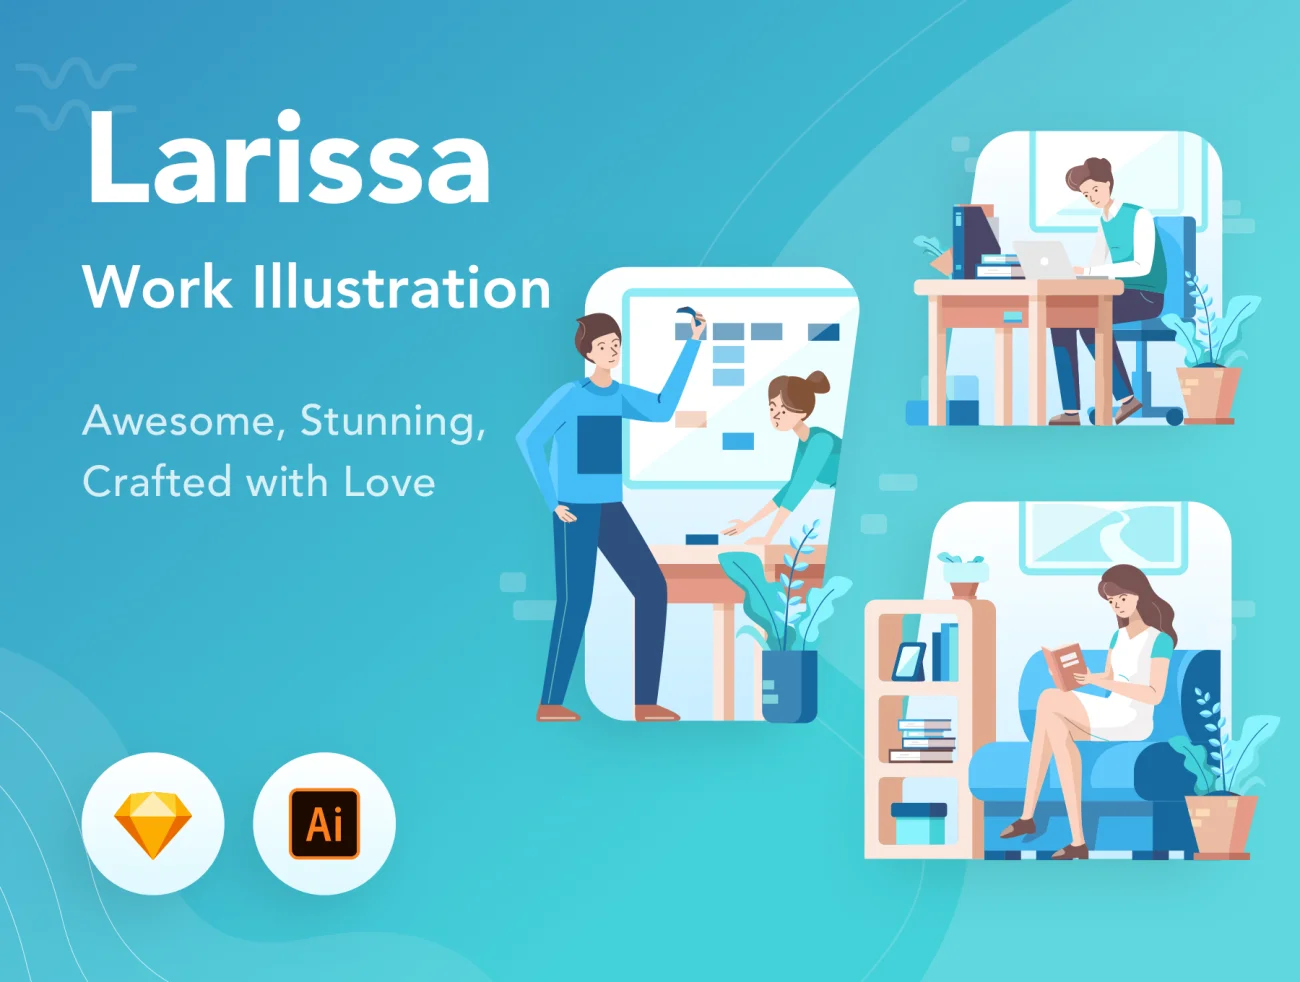 Larissa Work Illustration 工作场景作品插图-人物插画、商业金融、场景插画、学习生活、插画、插画功能、插画风格、概念创意、社交购物、线条手绘、职场办公、趣味漫画-到位啦UI